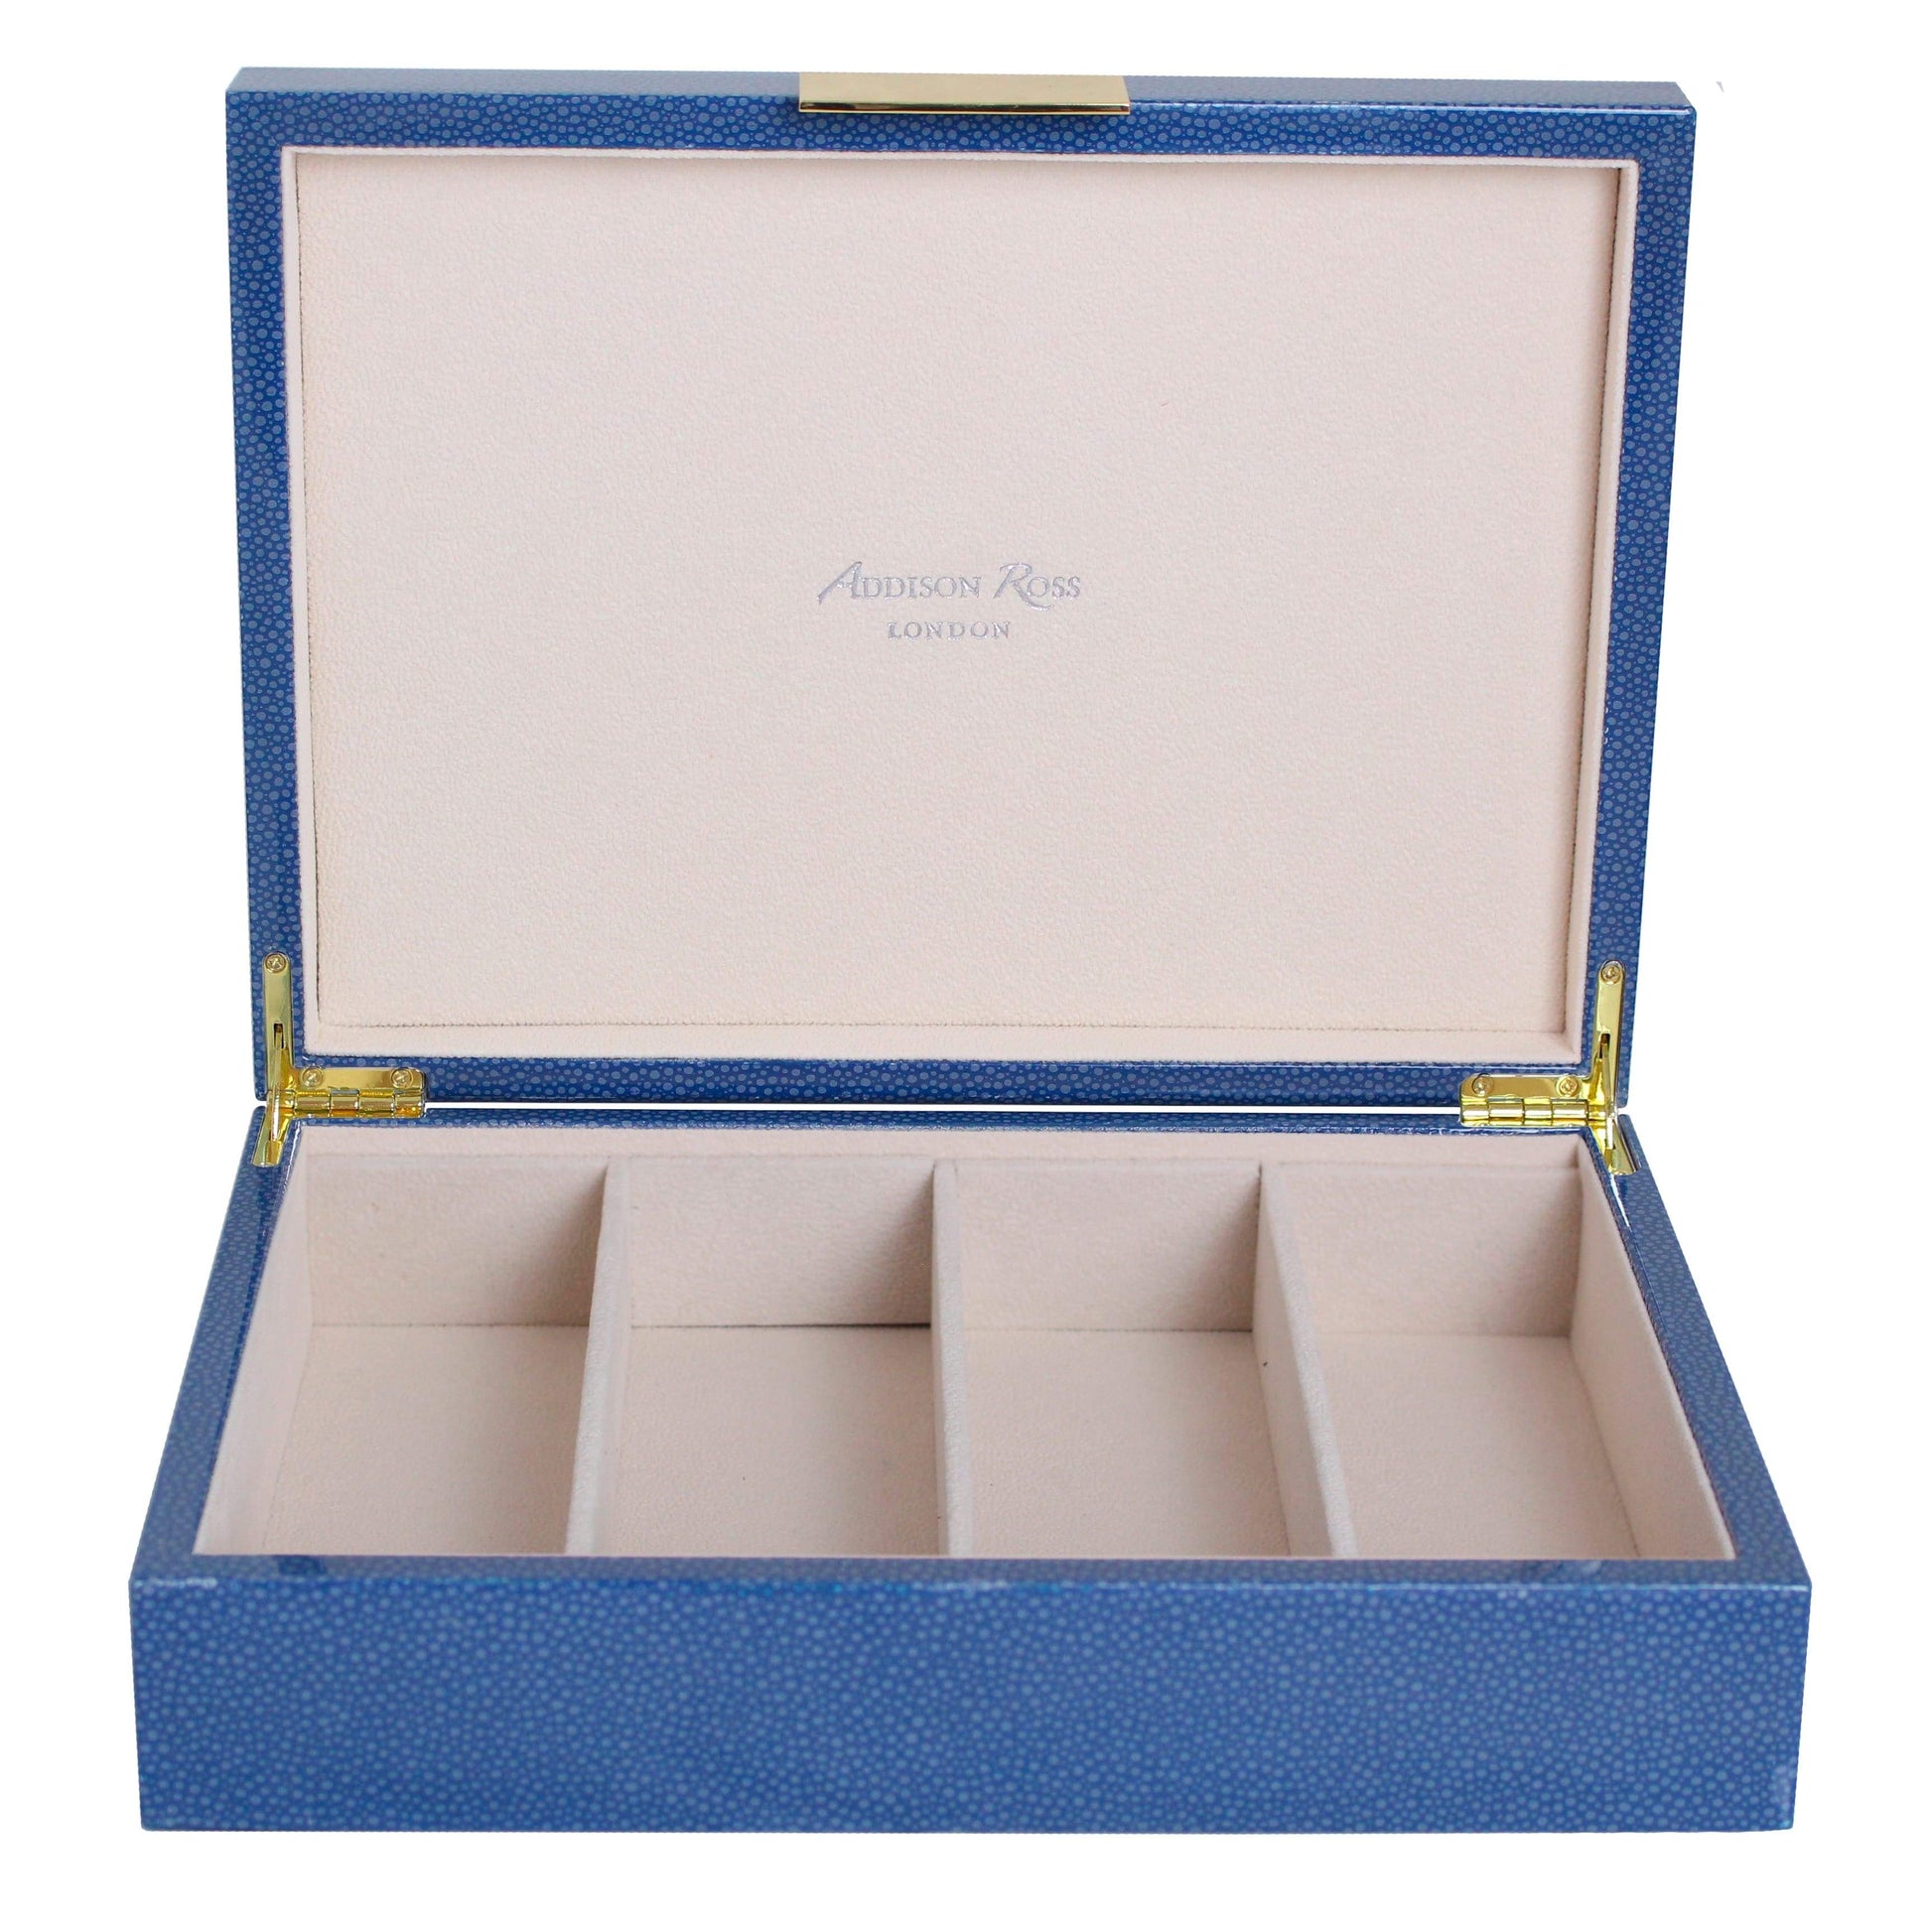 Large blue glasses box with cream suede interior